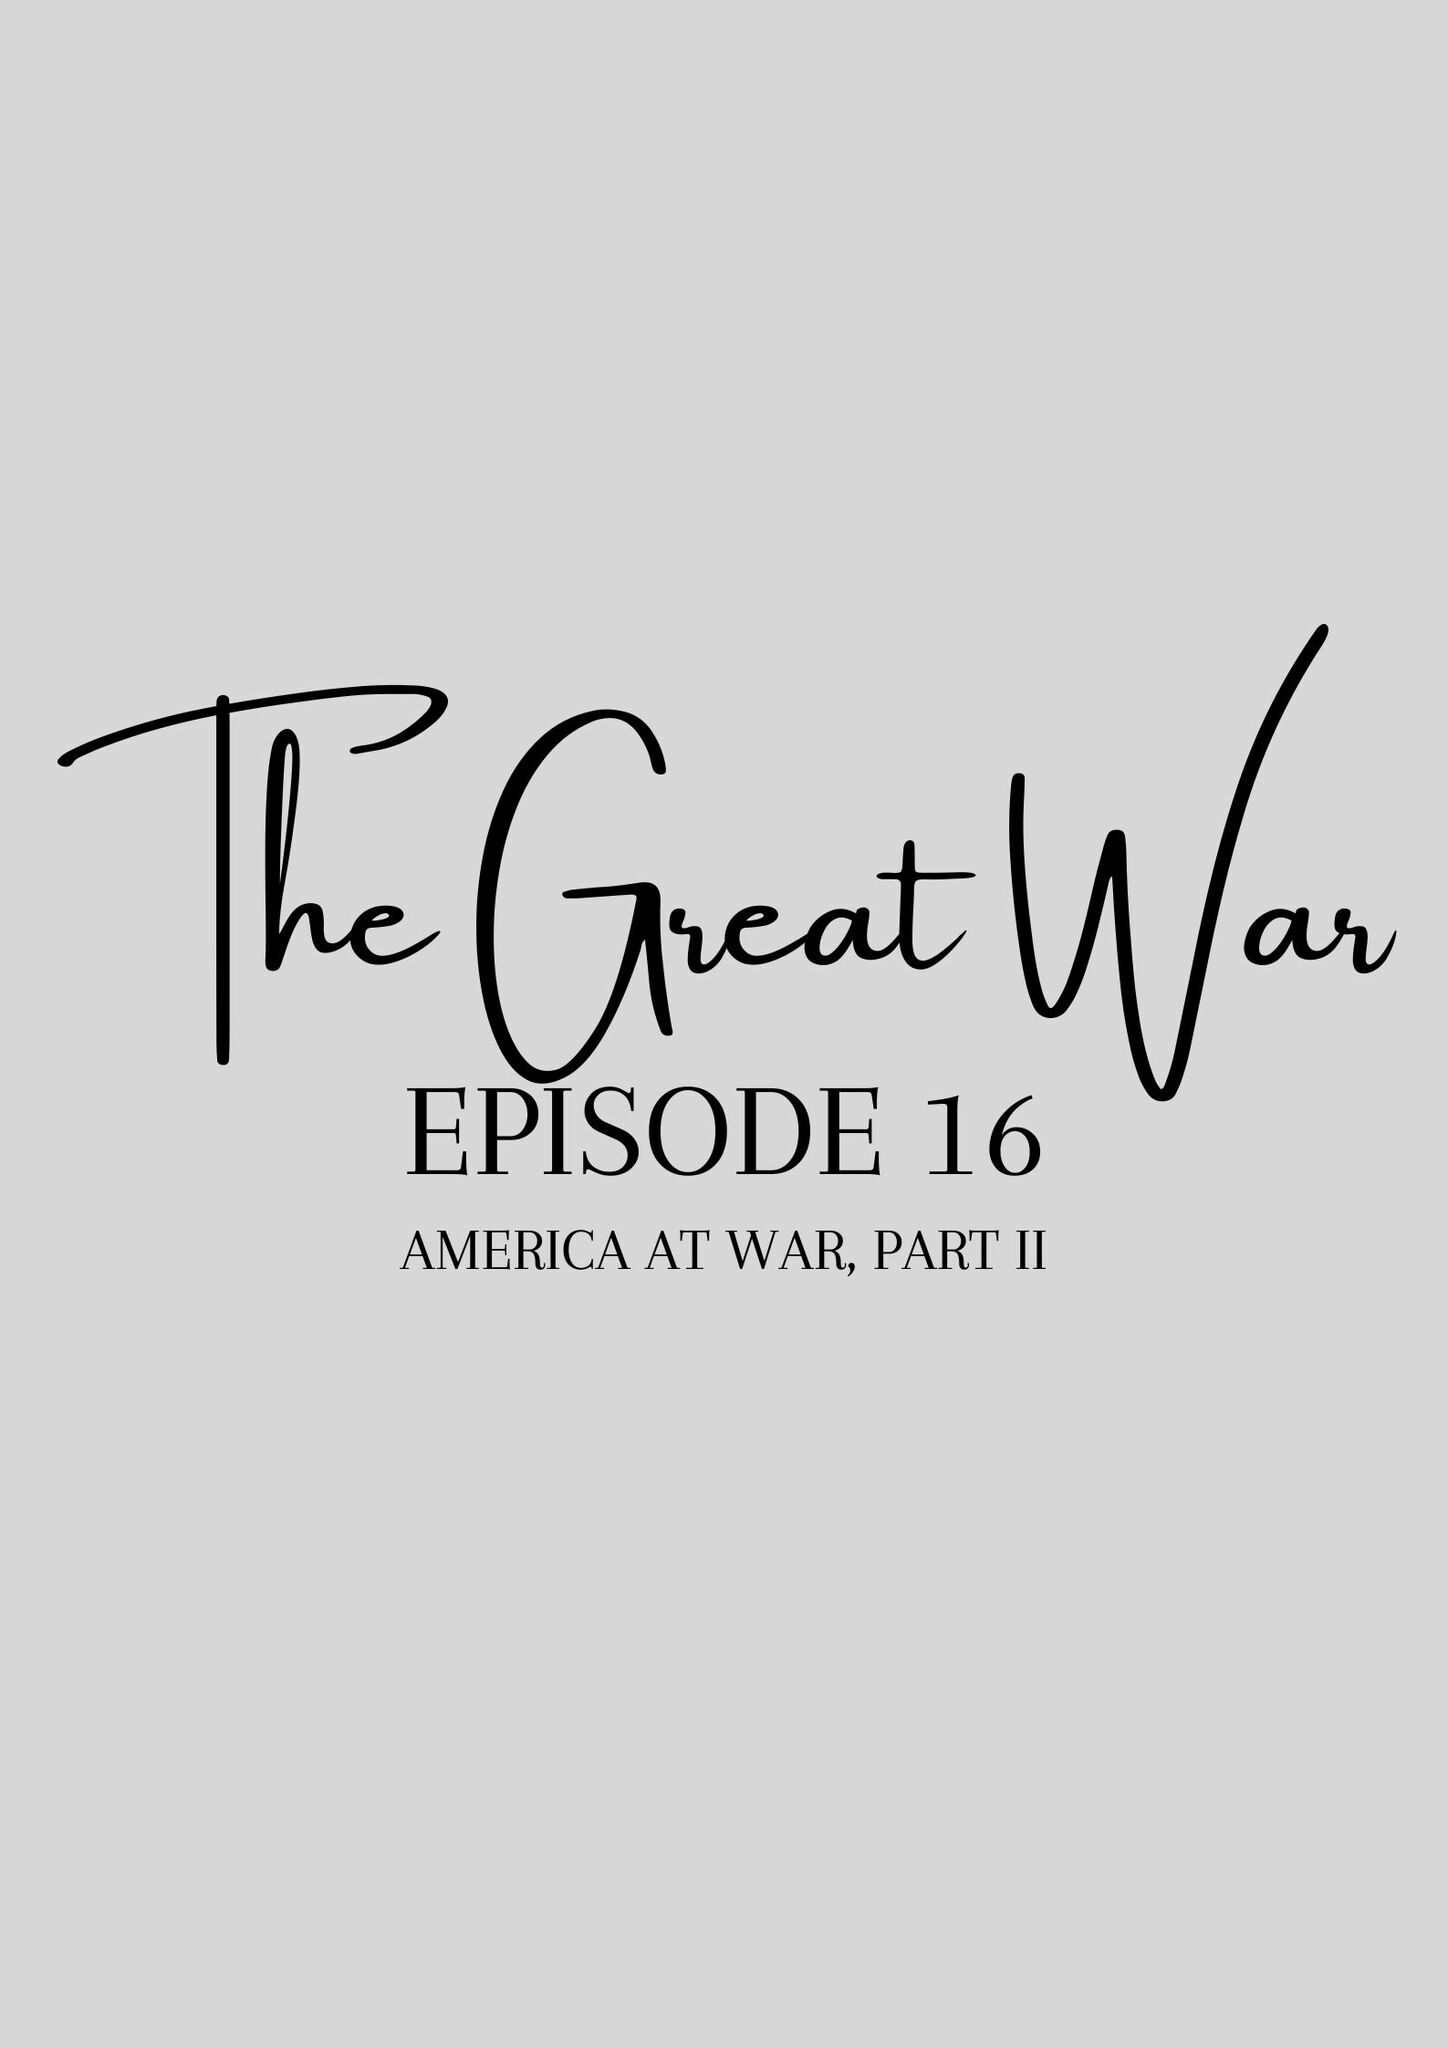 AMERICA AT WAR, PART II